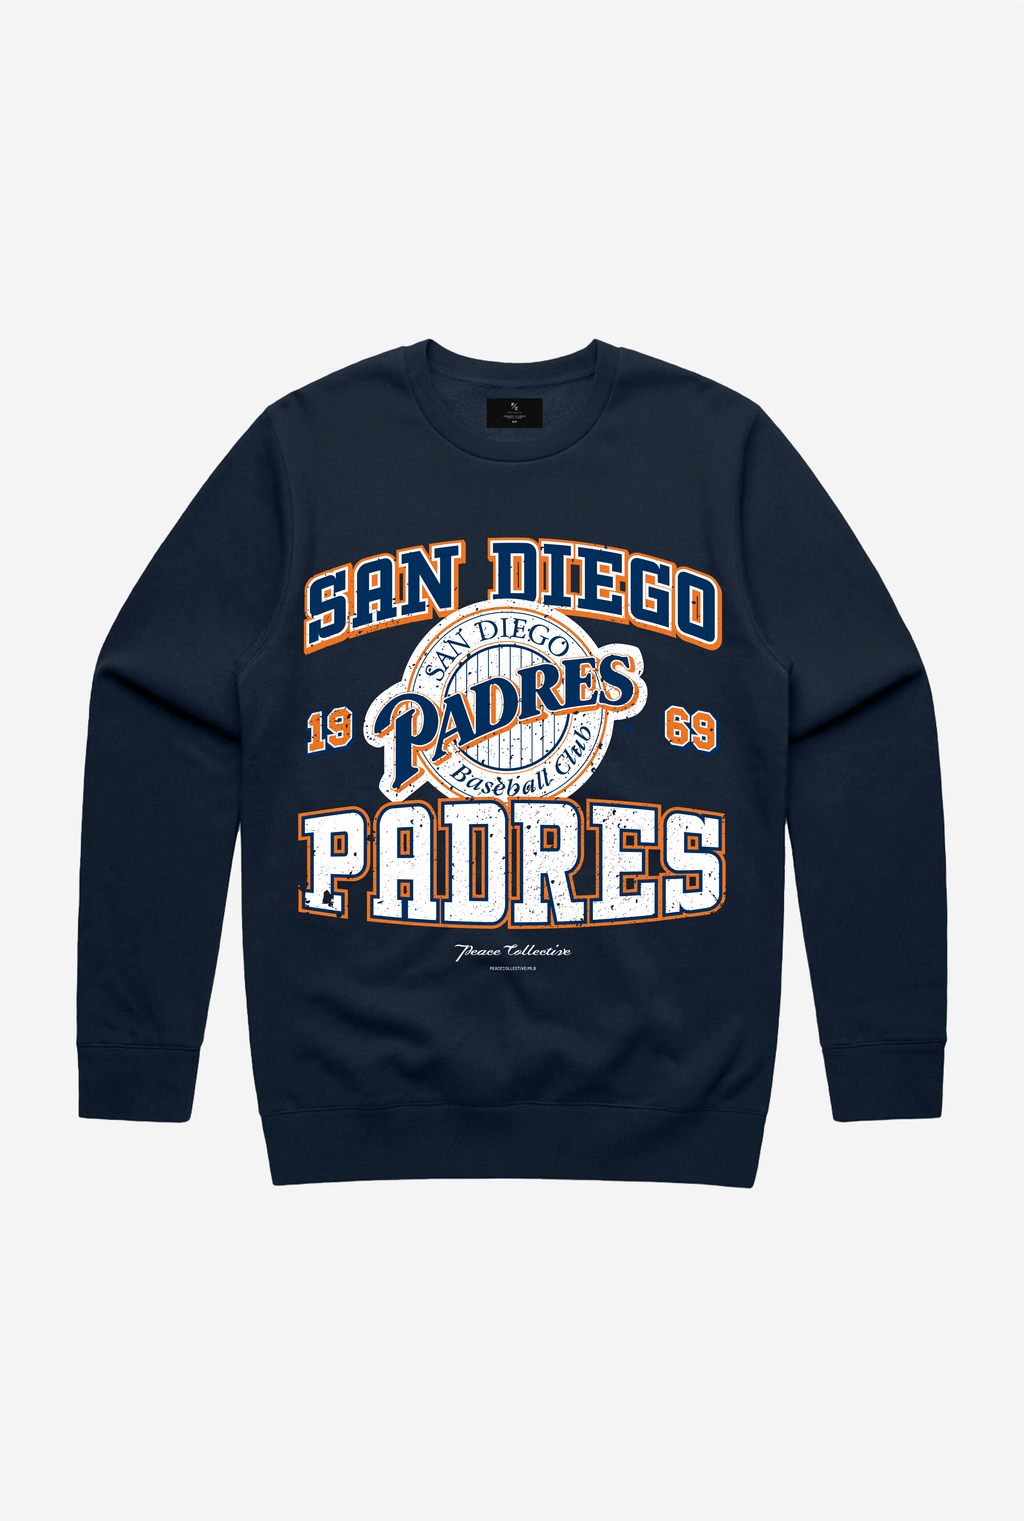 San Diego Padres Friartown One Champion Vintage Shirt, hoodie